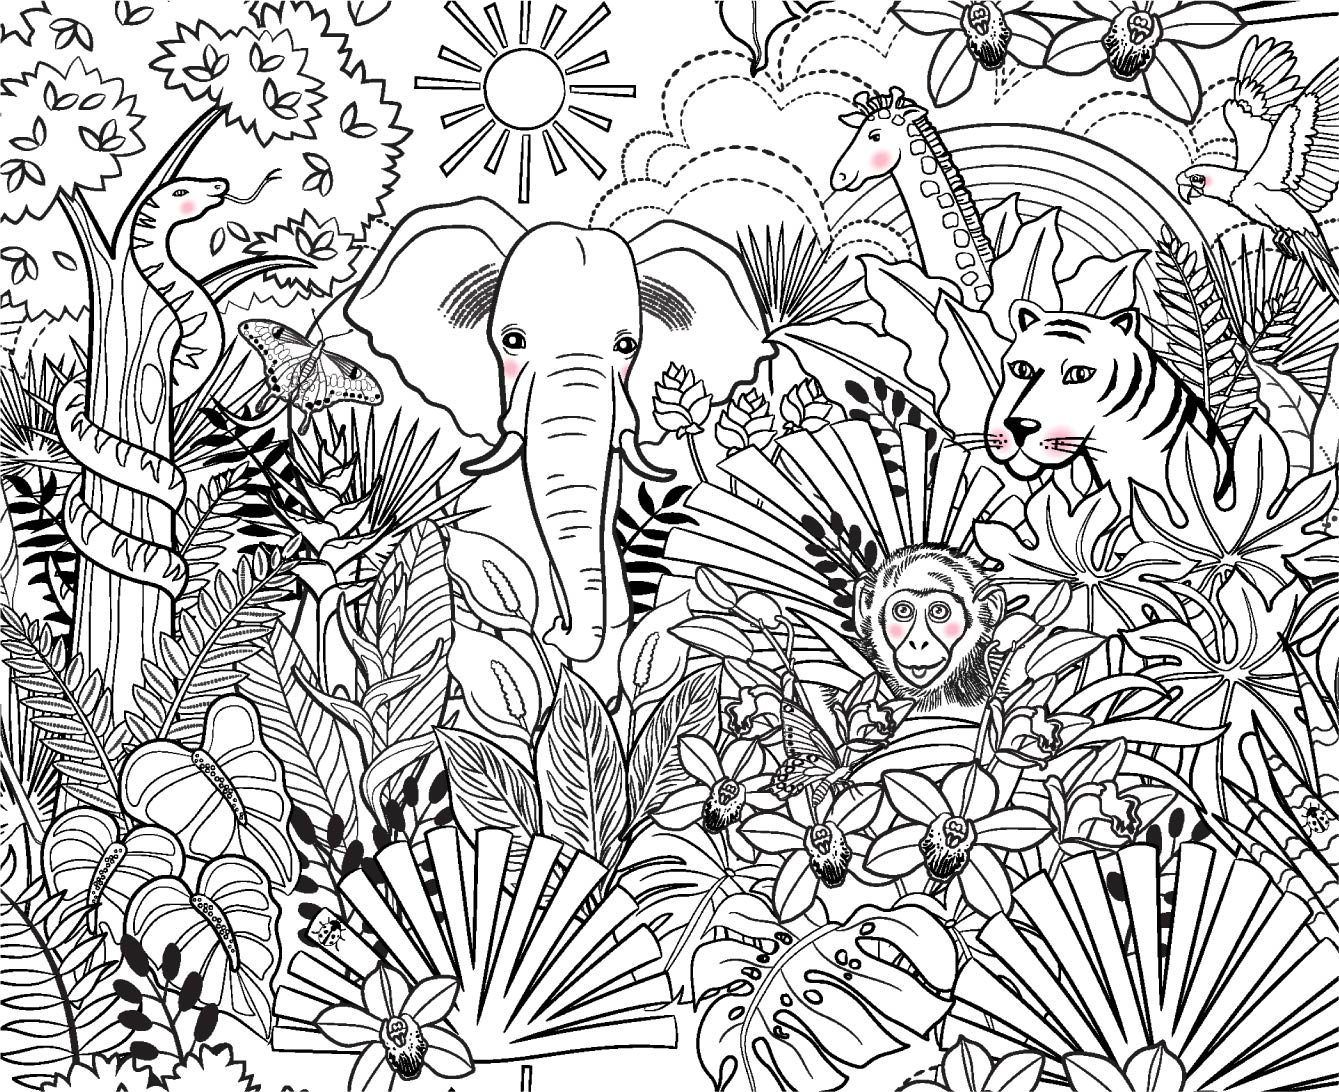 Pamela Duarte Illustration Imaginary Safari Black and White